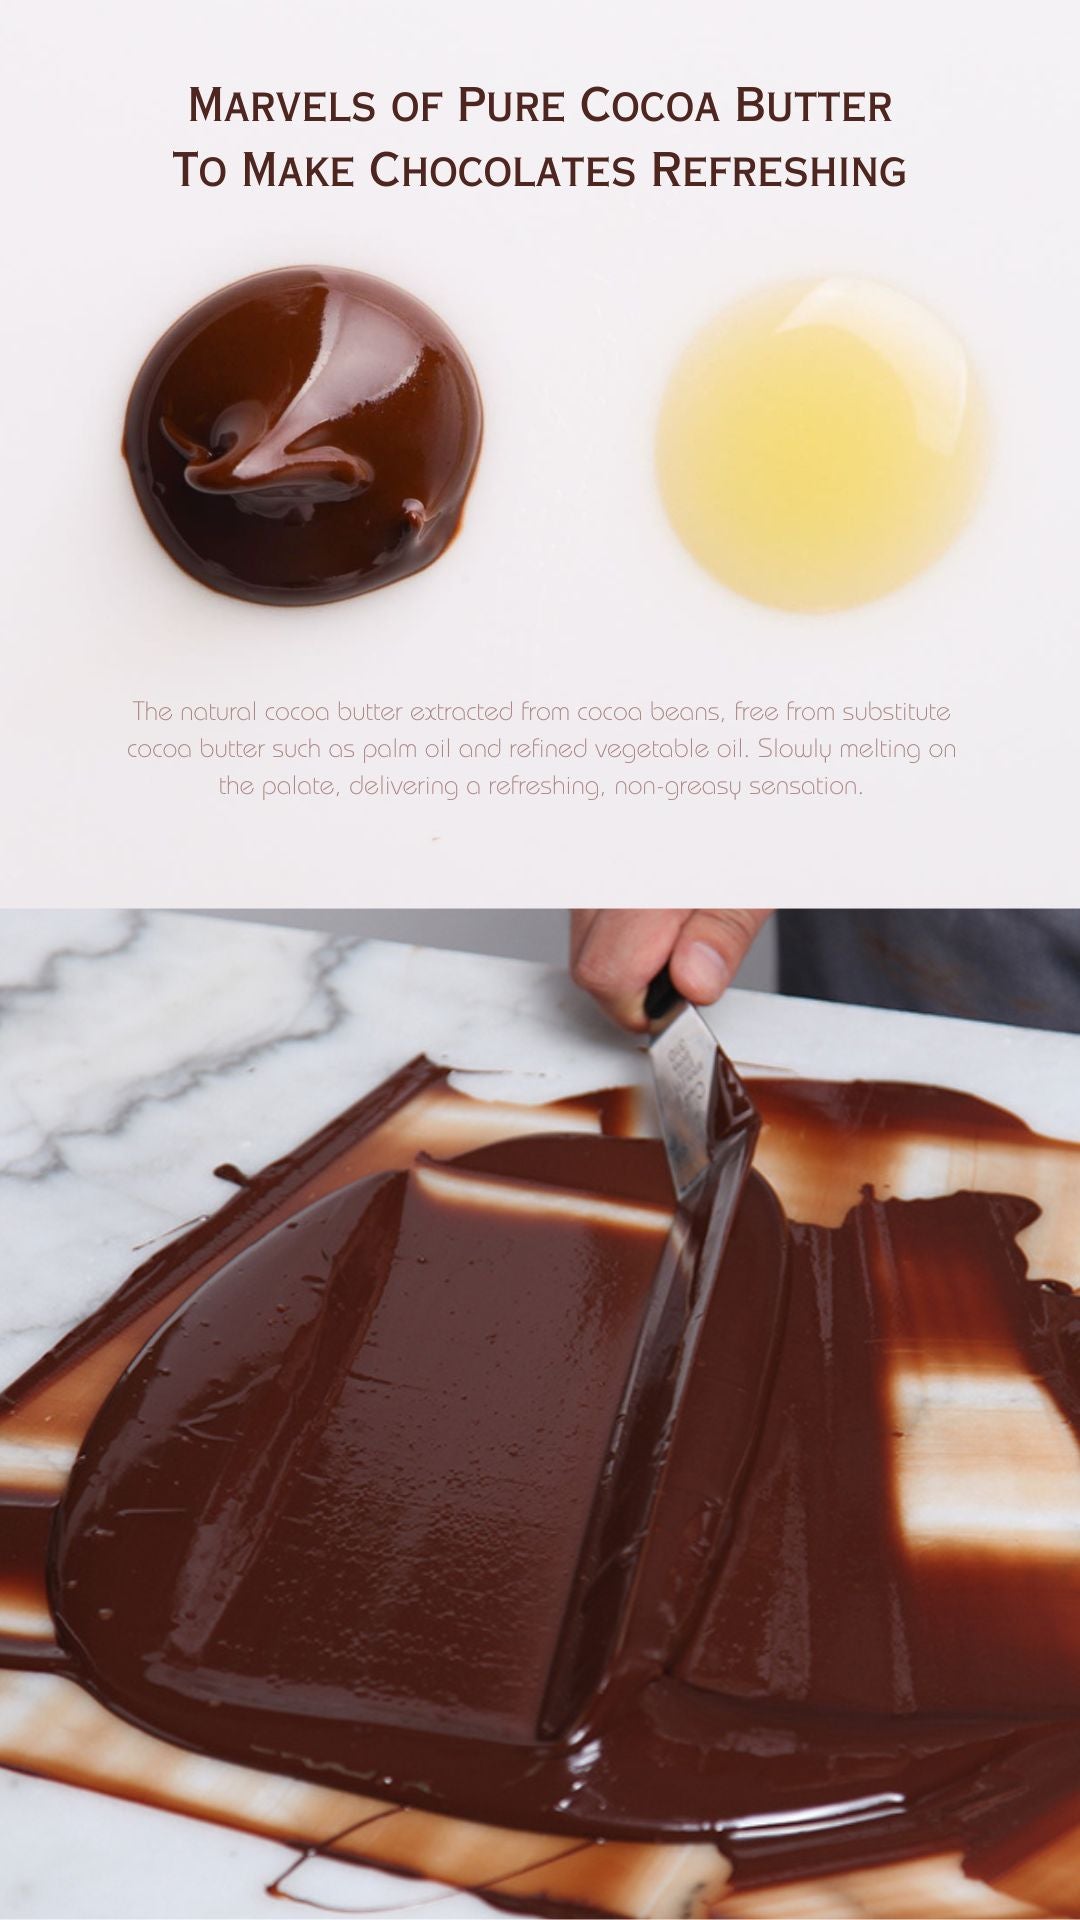 amotrio chocolate uses pure cocoa butter